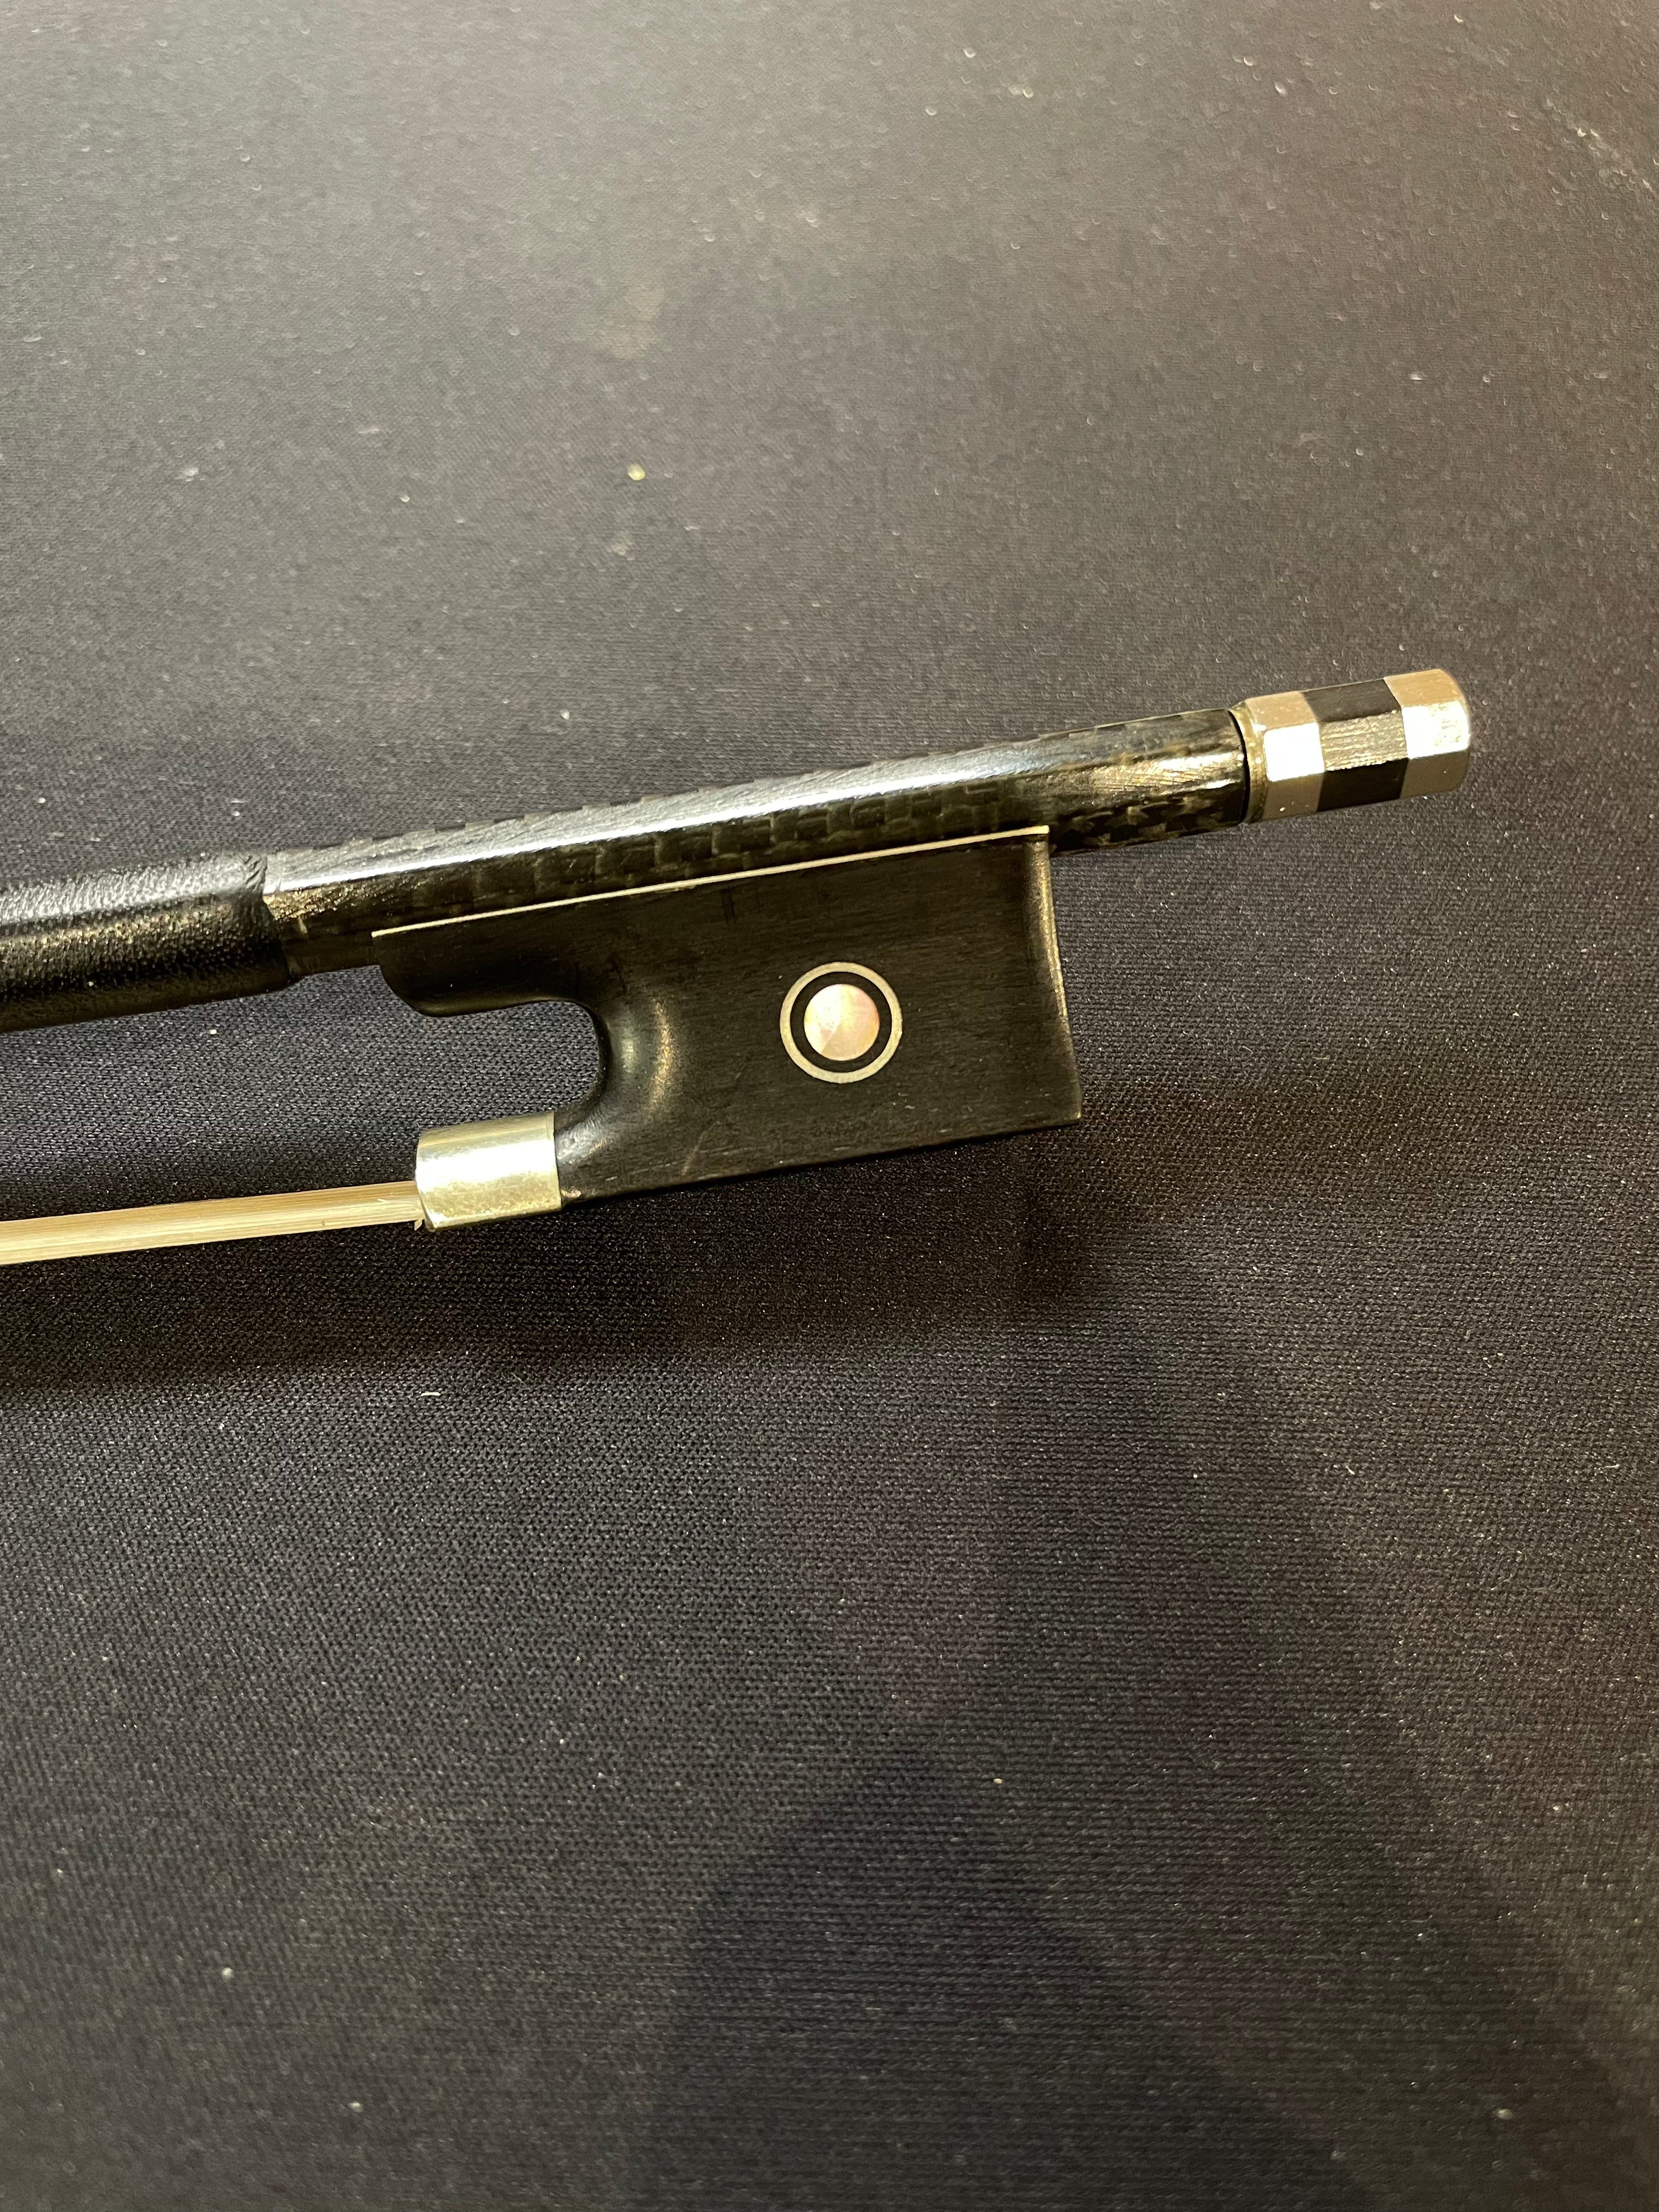 4/4 Violin Bow - Carbon Fiber Reale II Model